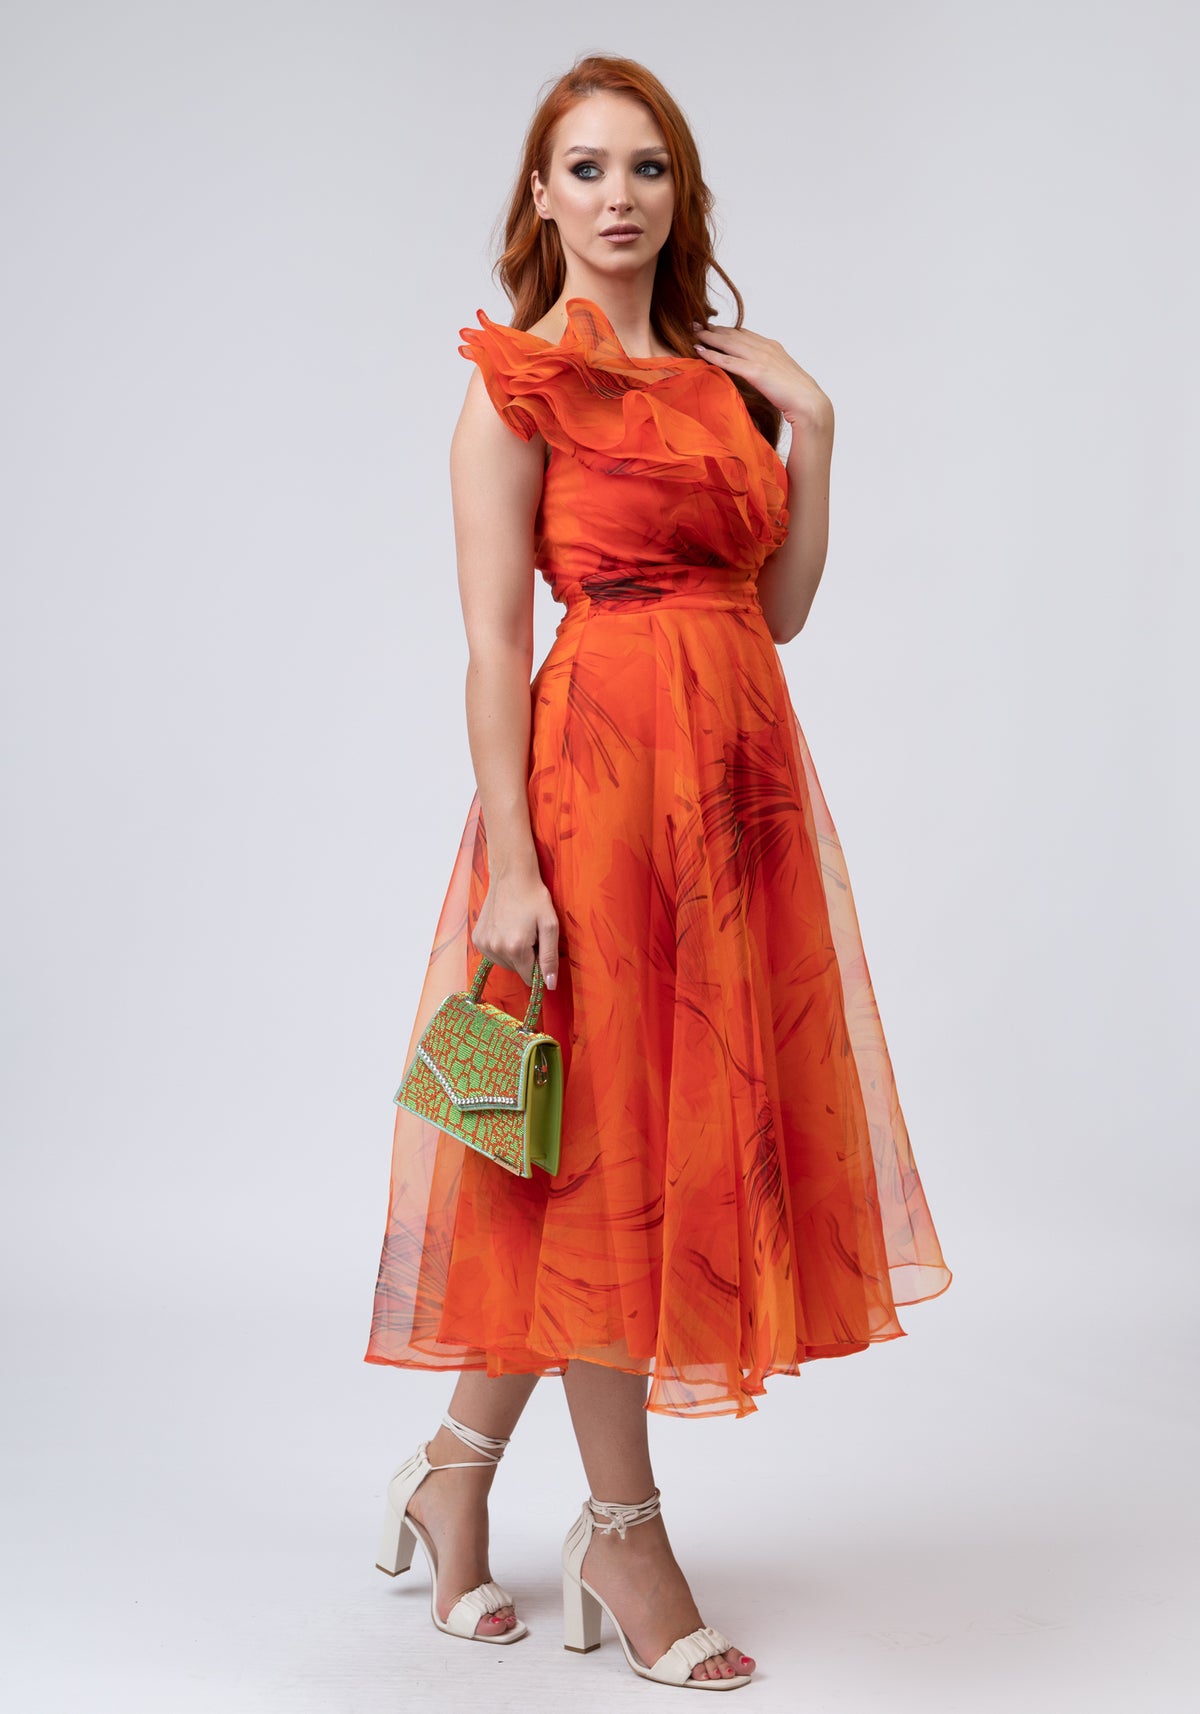 Short orange dress